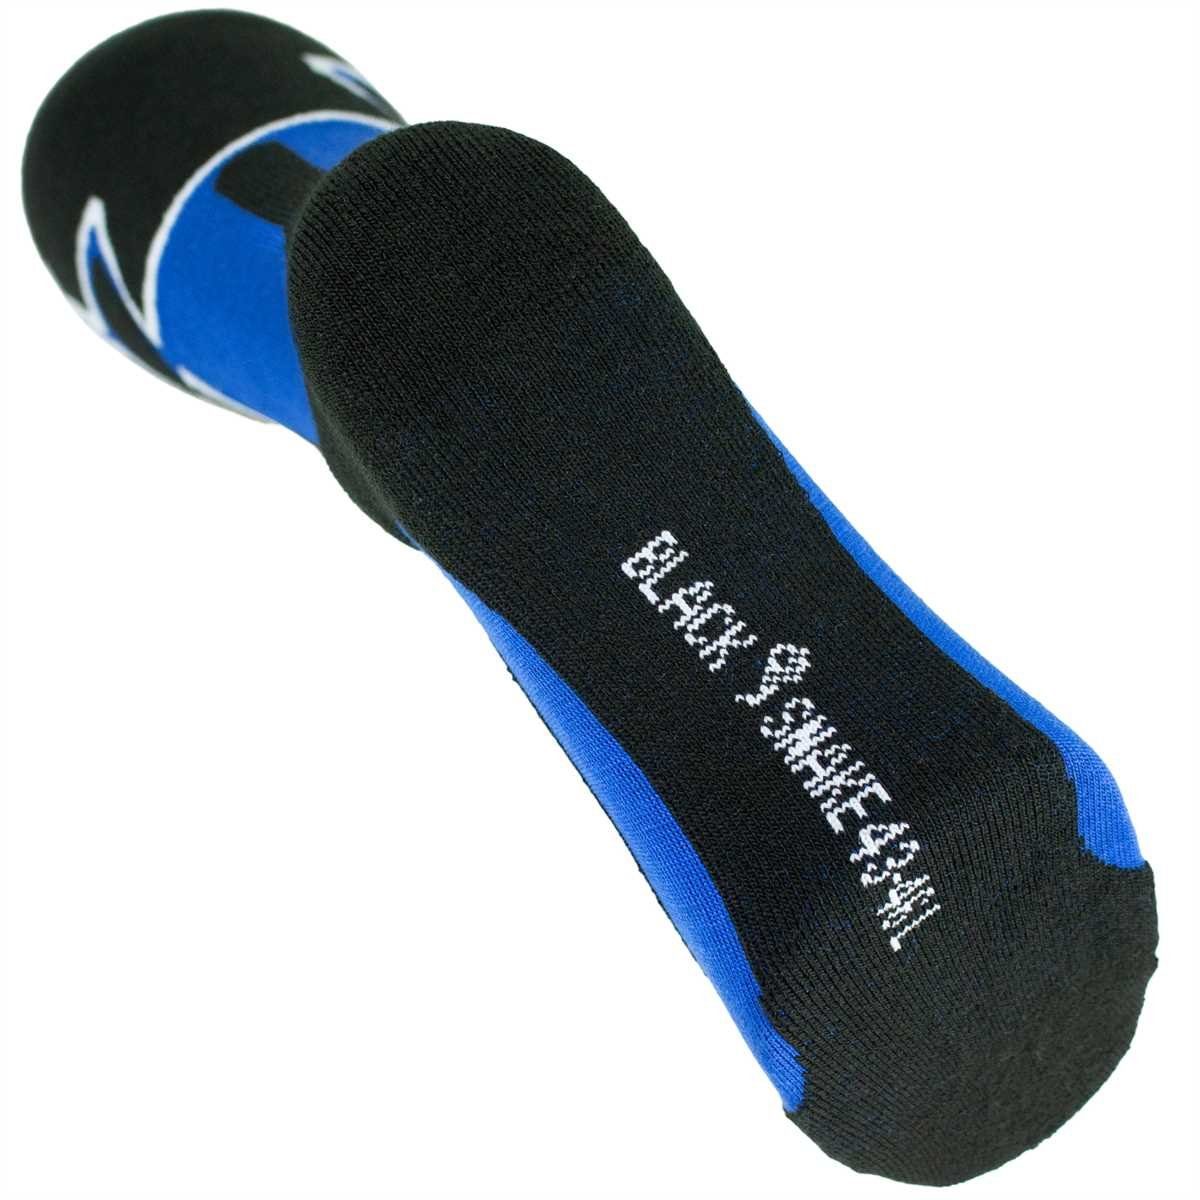 high gepolsterte Black (2-Paar) Skisocken Schwarz/Blau Snake Sportsocken Funktionssocken Ski Snowboard protection